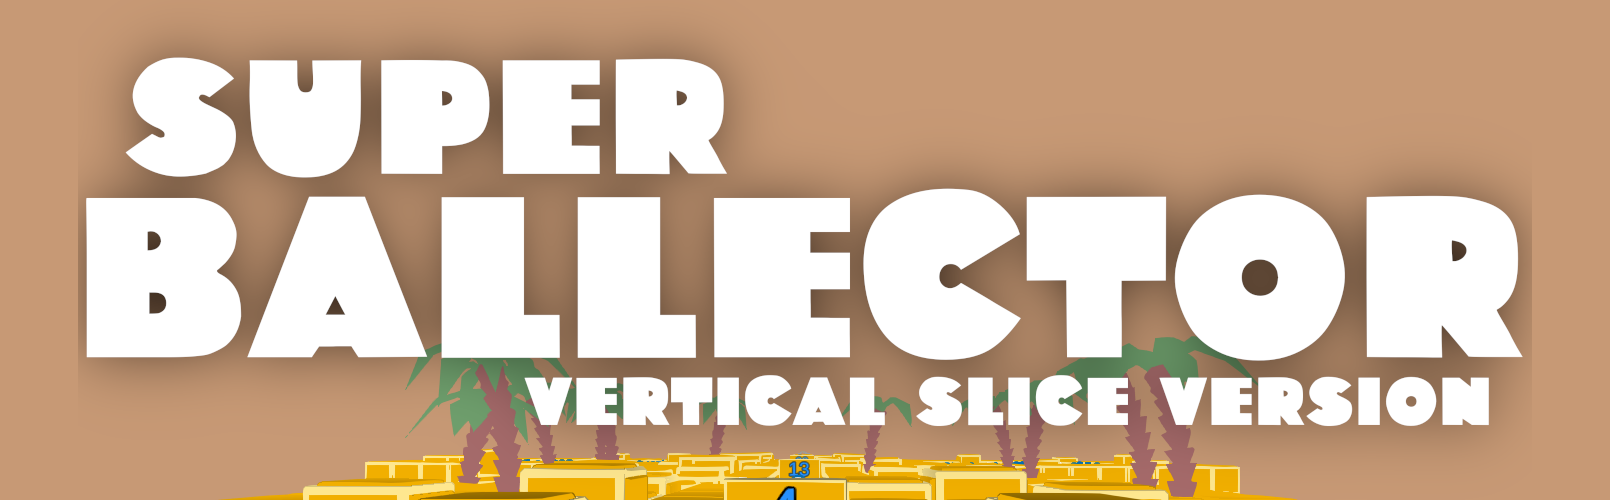 SUPER BALLECTOR: Vertical Slice version